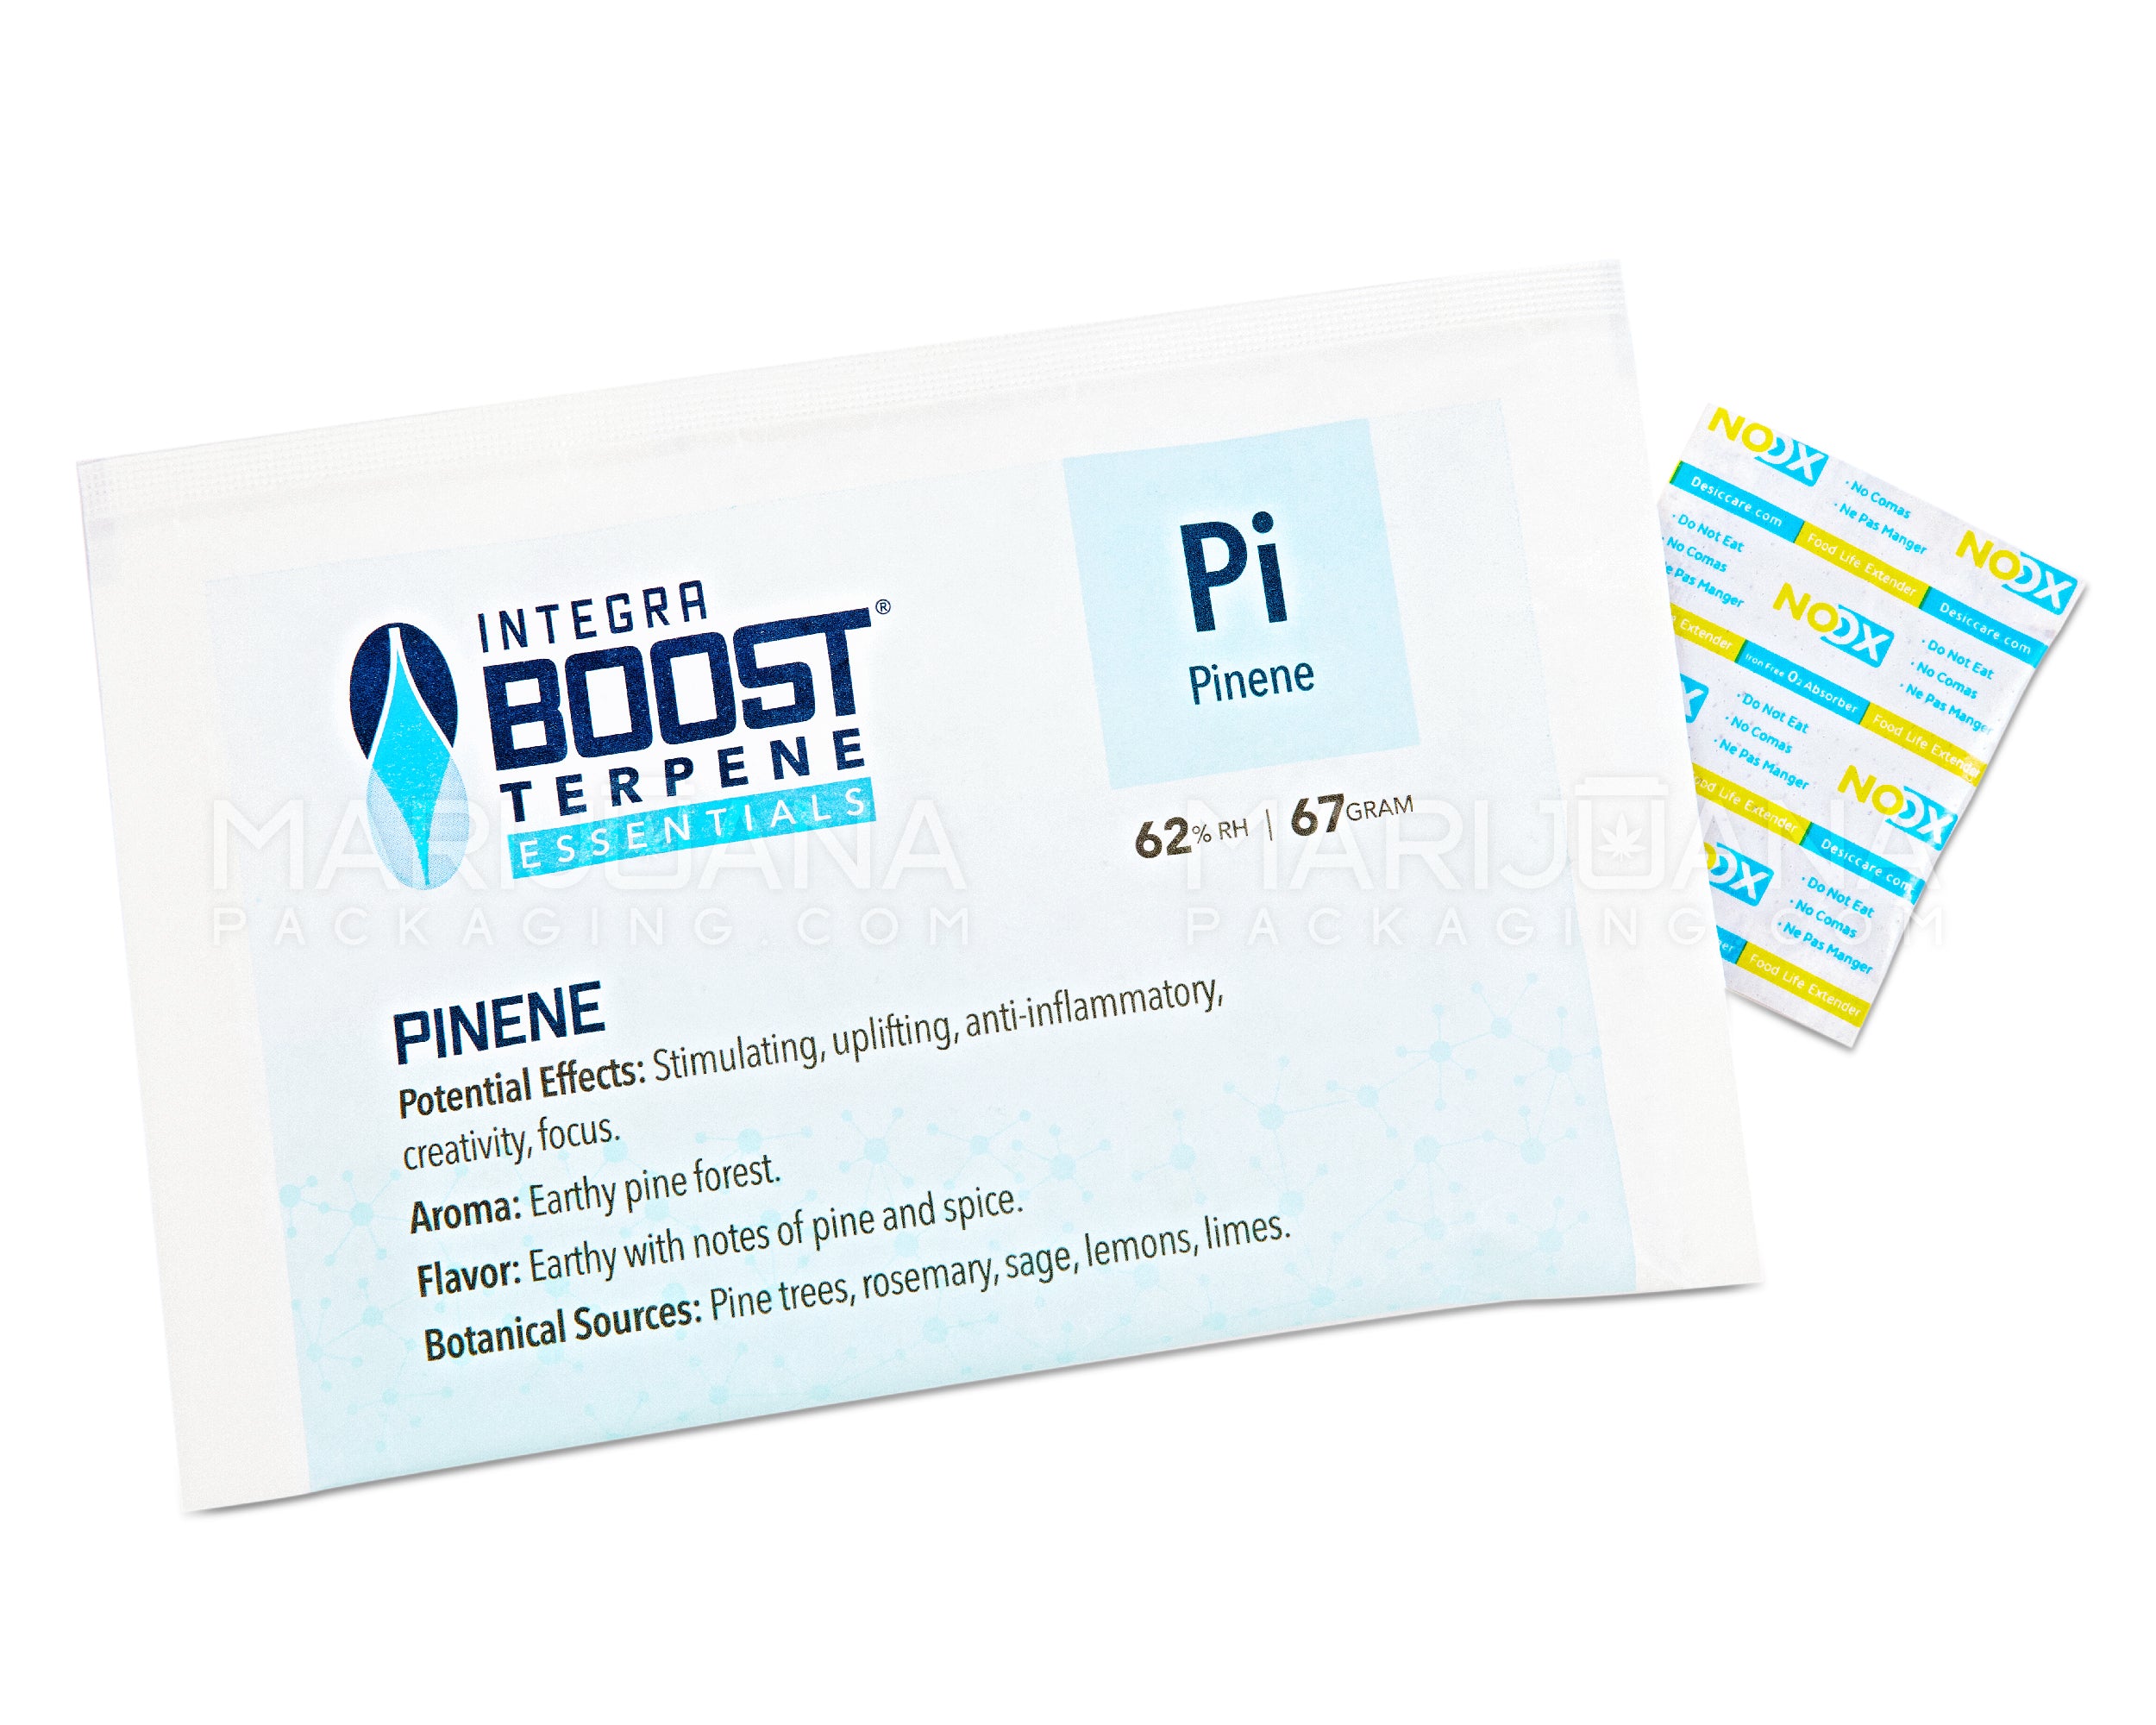 INTEGRA | 'Retail Display' Boost Terpene Essentials Pinene Humidity Pack | 67 Grams - 62% - 12 Count - 4